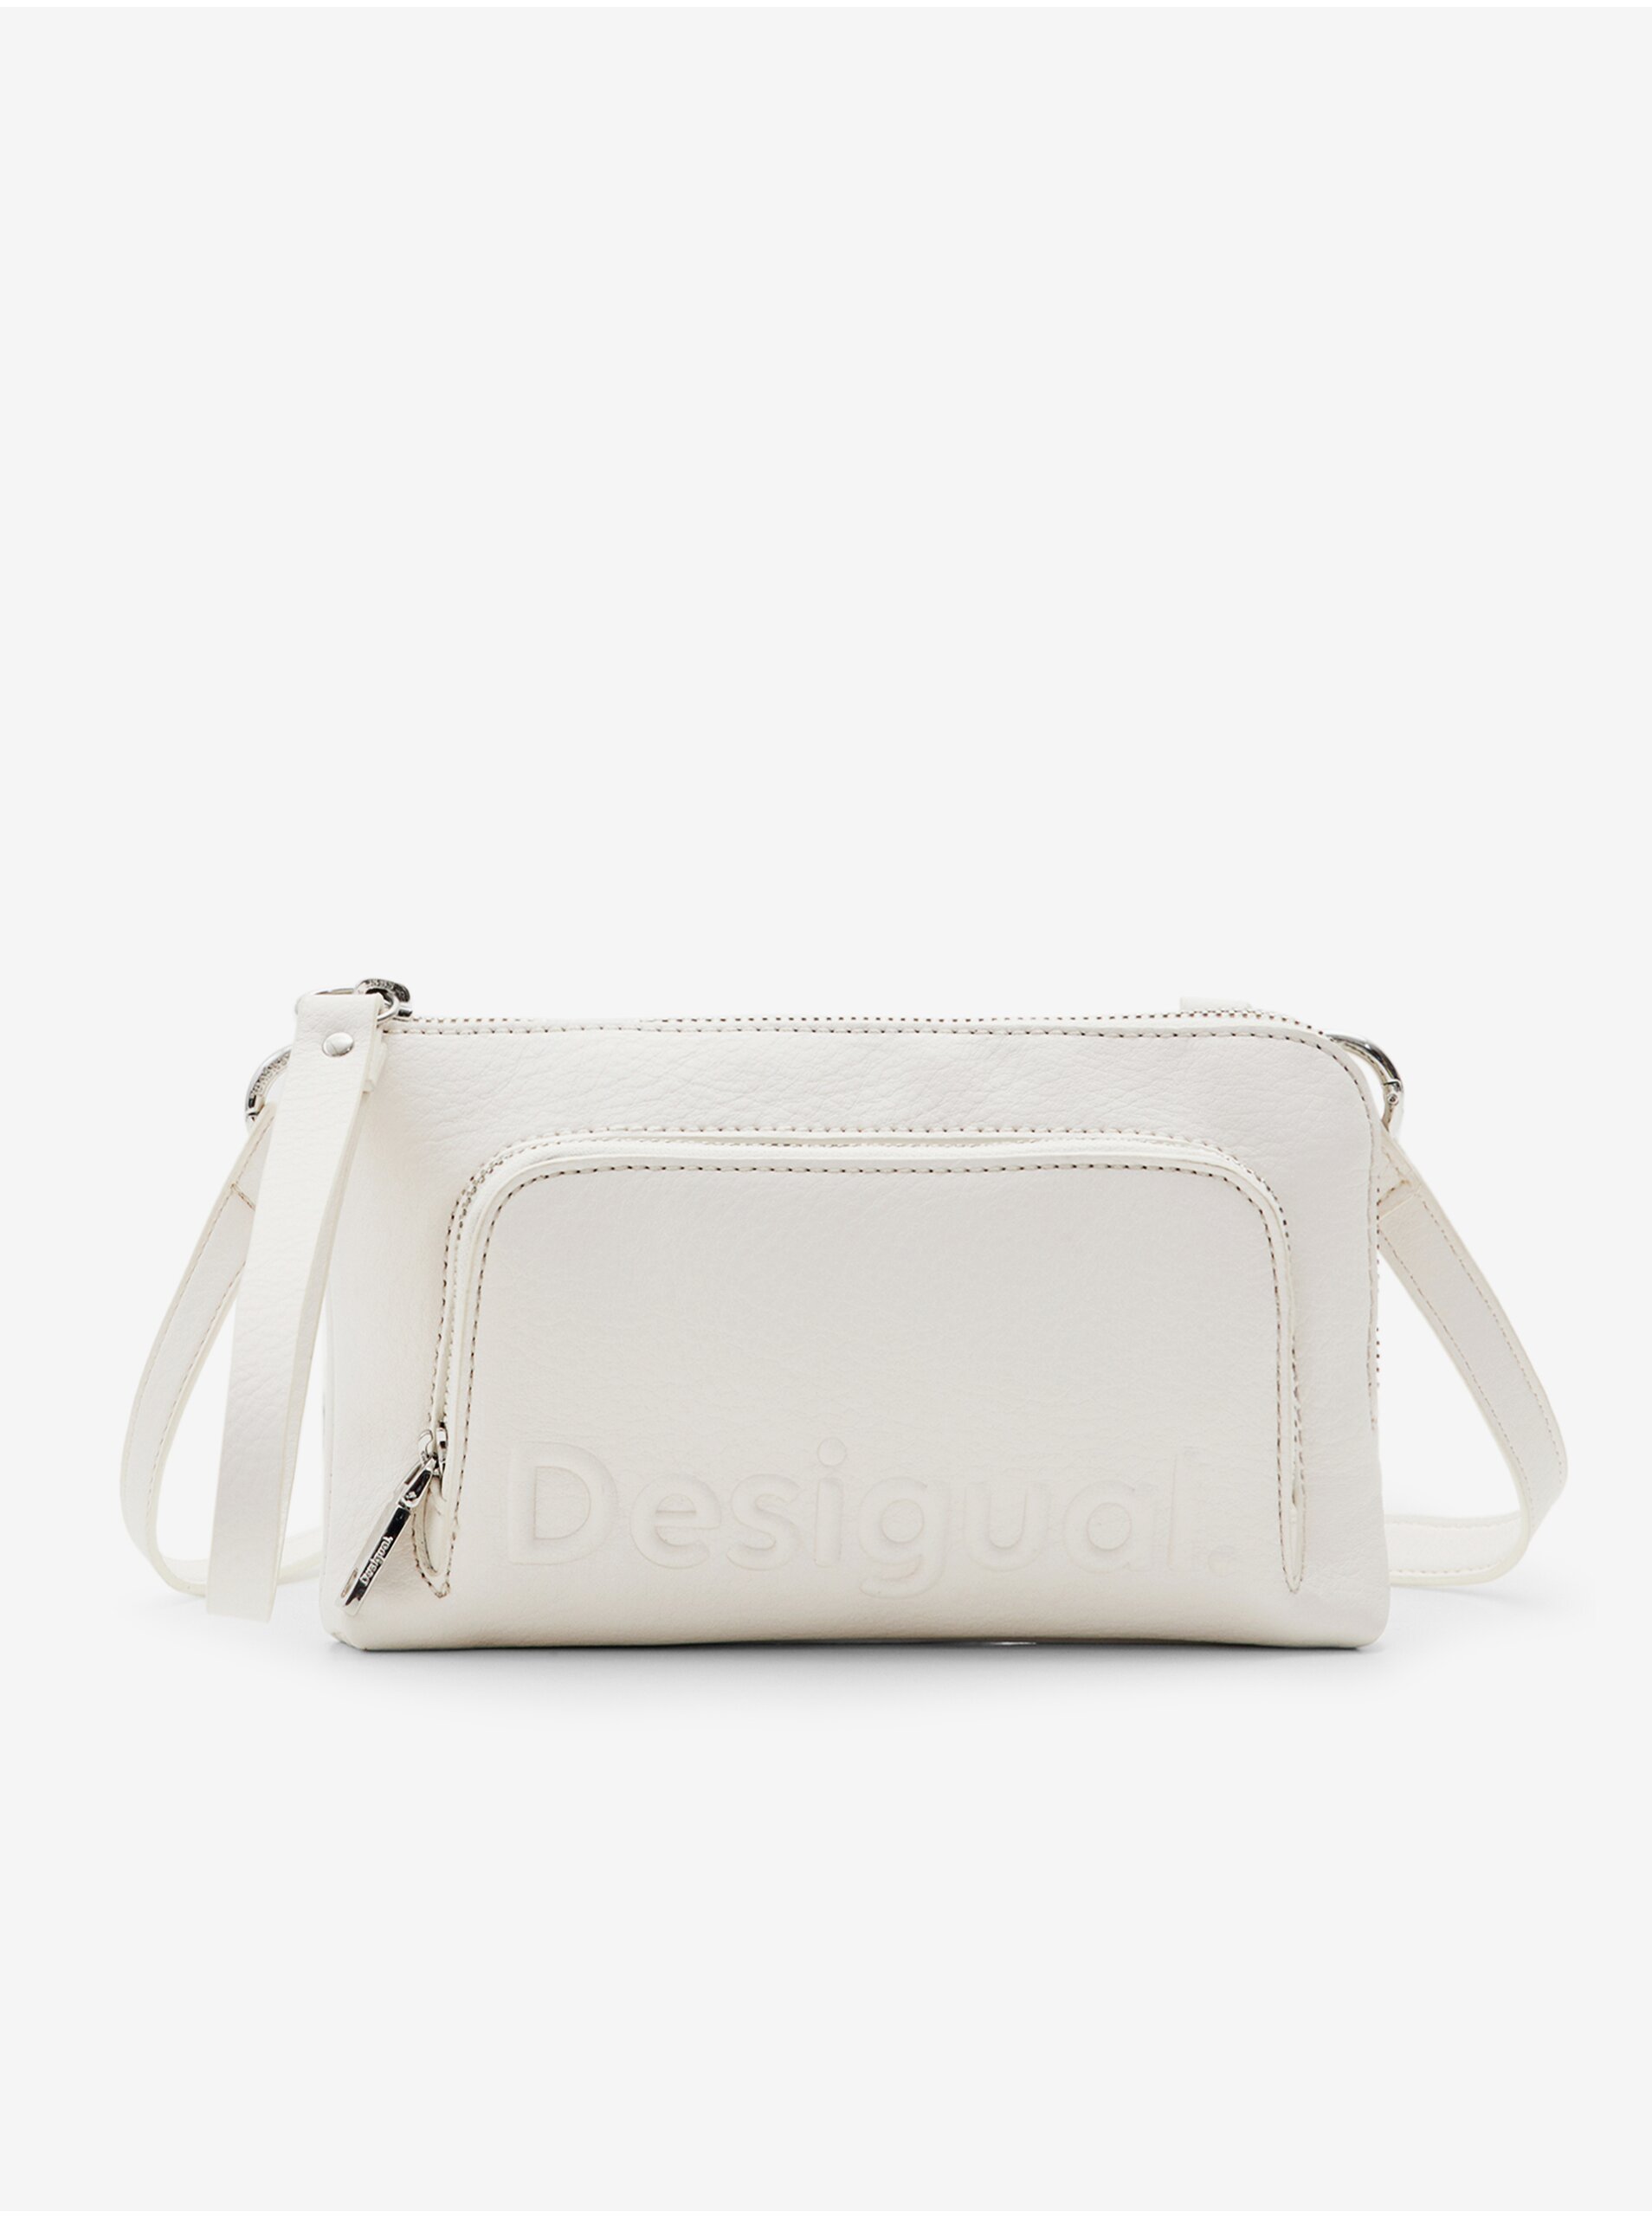 White women's handbag Desigual Lisa - Women